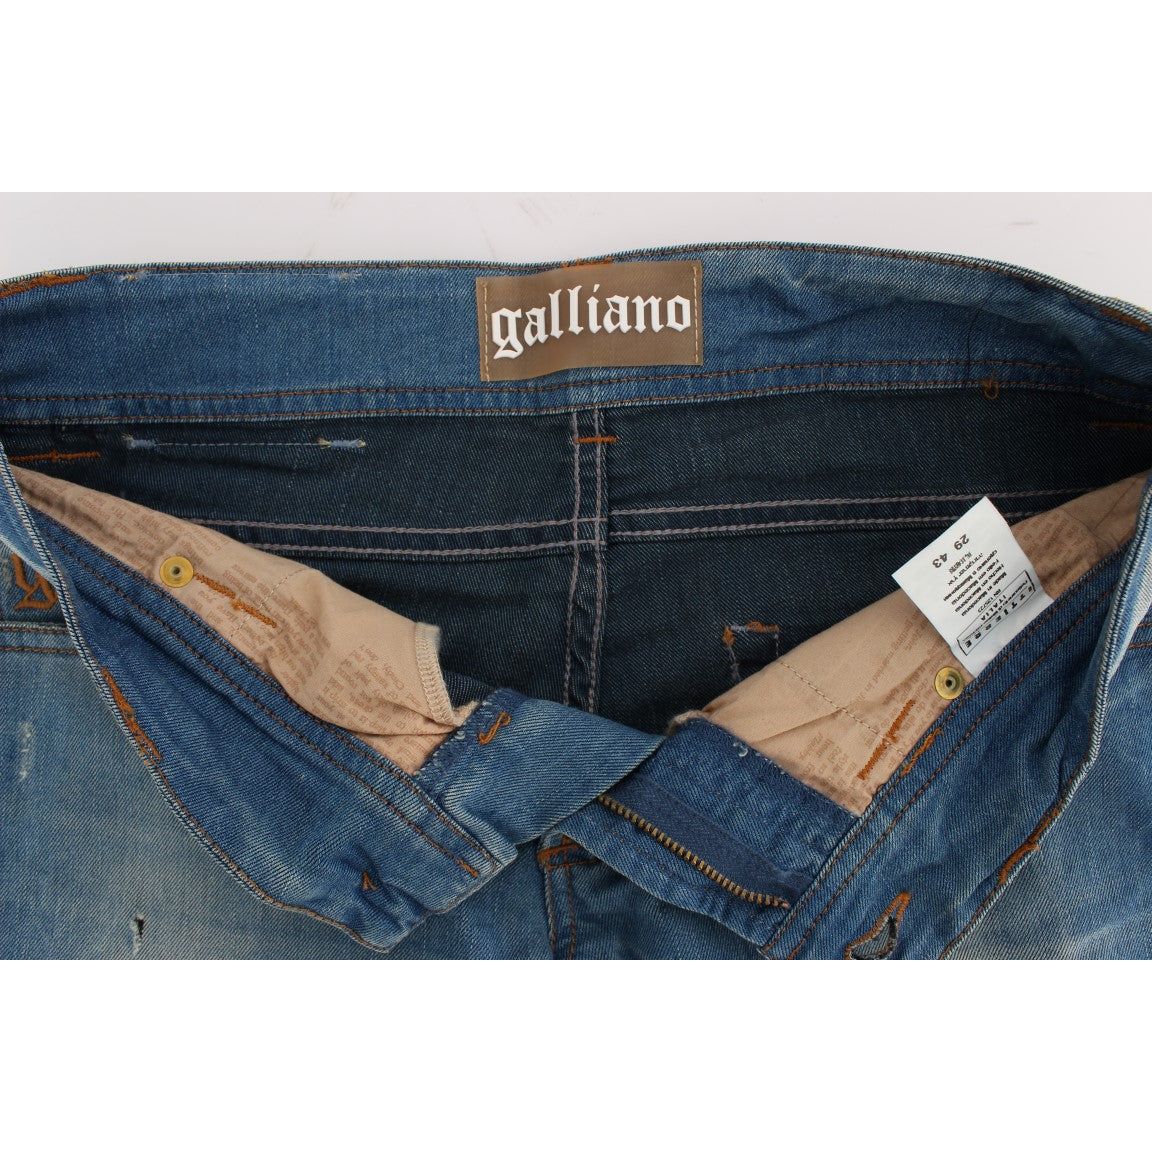 John Galliano Sleek Blue Slim Fit Designer Jeans blue-wash-cotton-blend-slim-fit-jeans-1 329905-blue-wash-cotton-blend-slim-fit-jeans-4-6.jpg